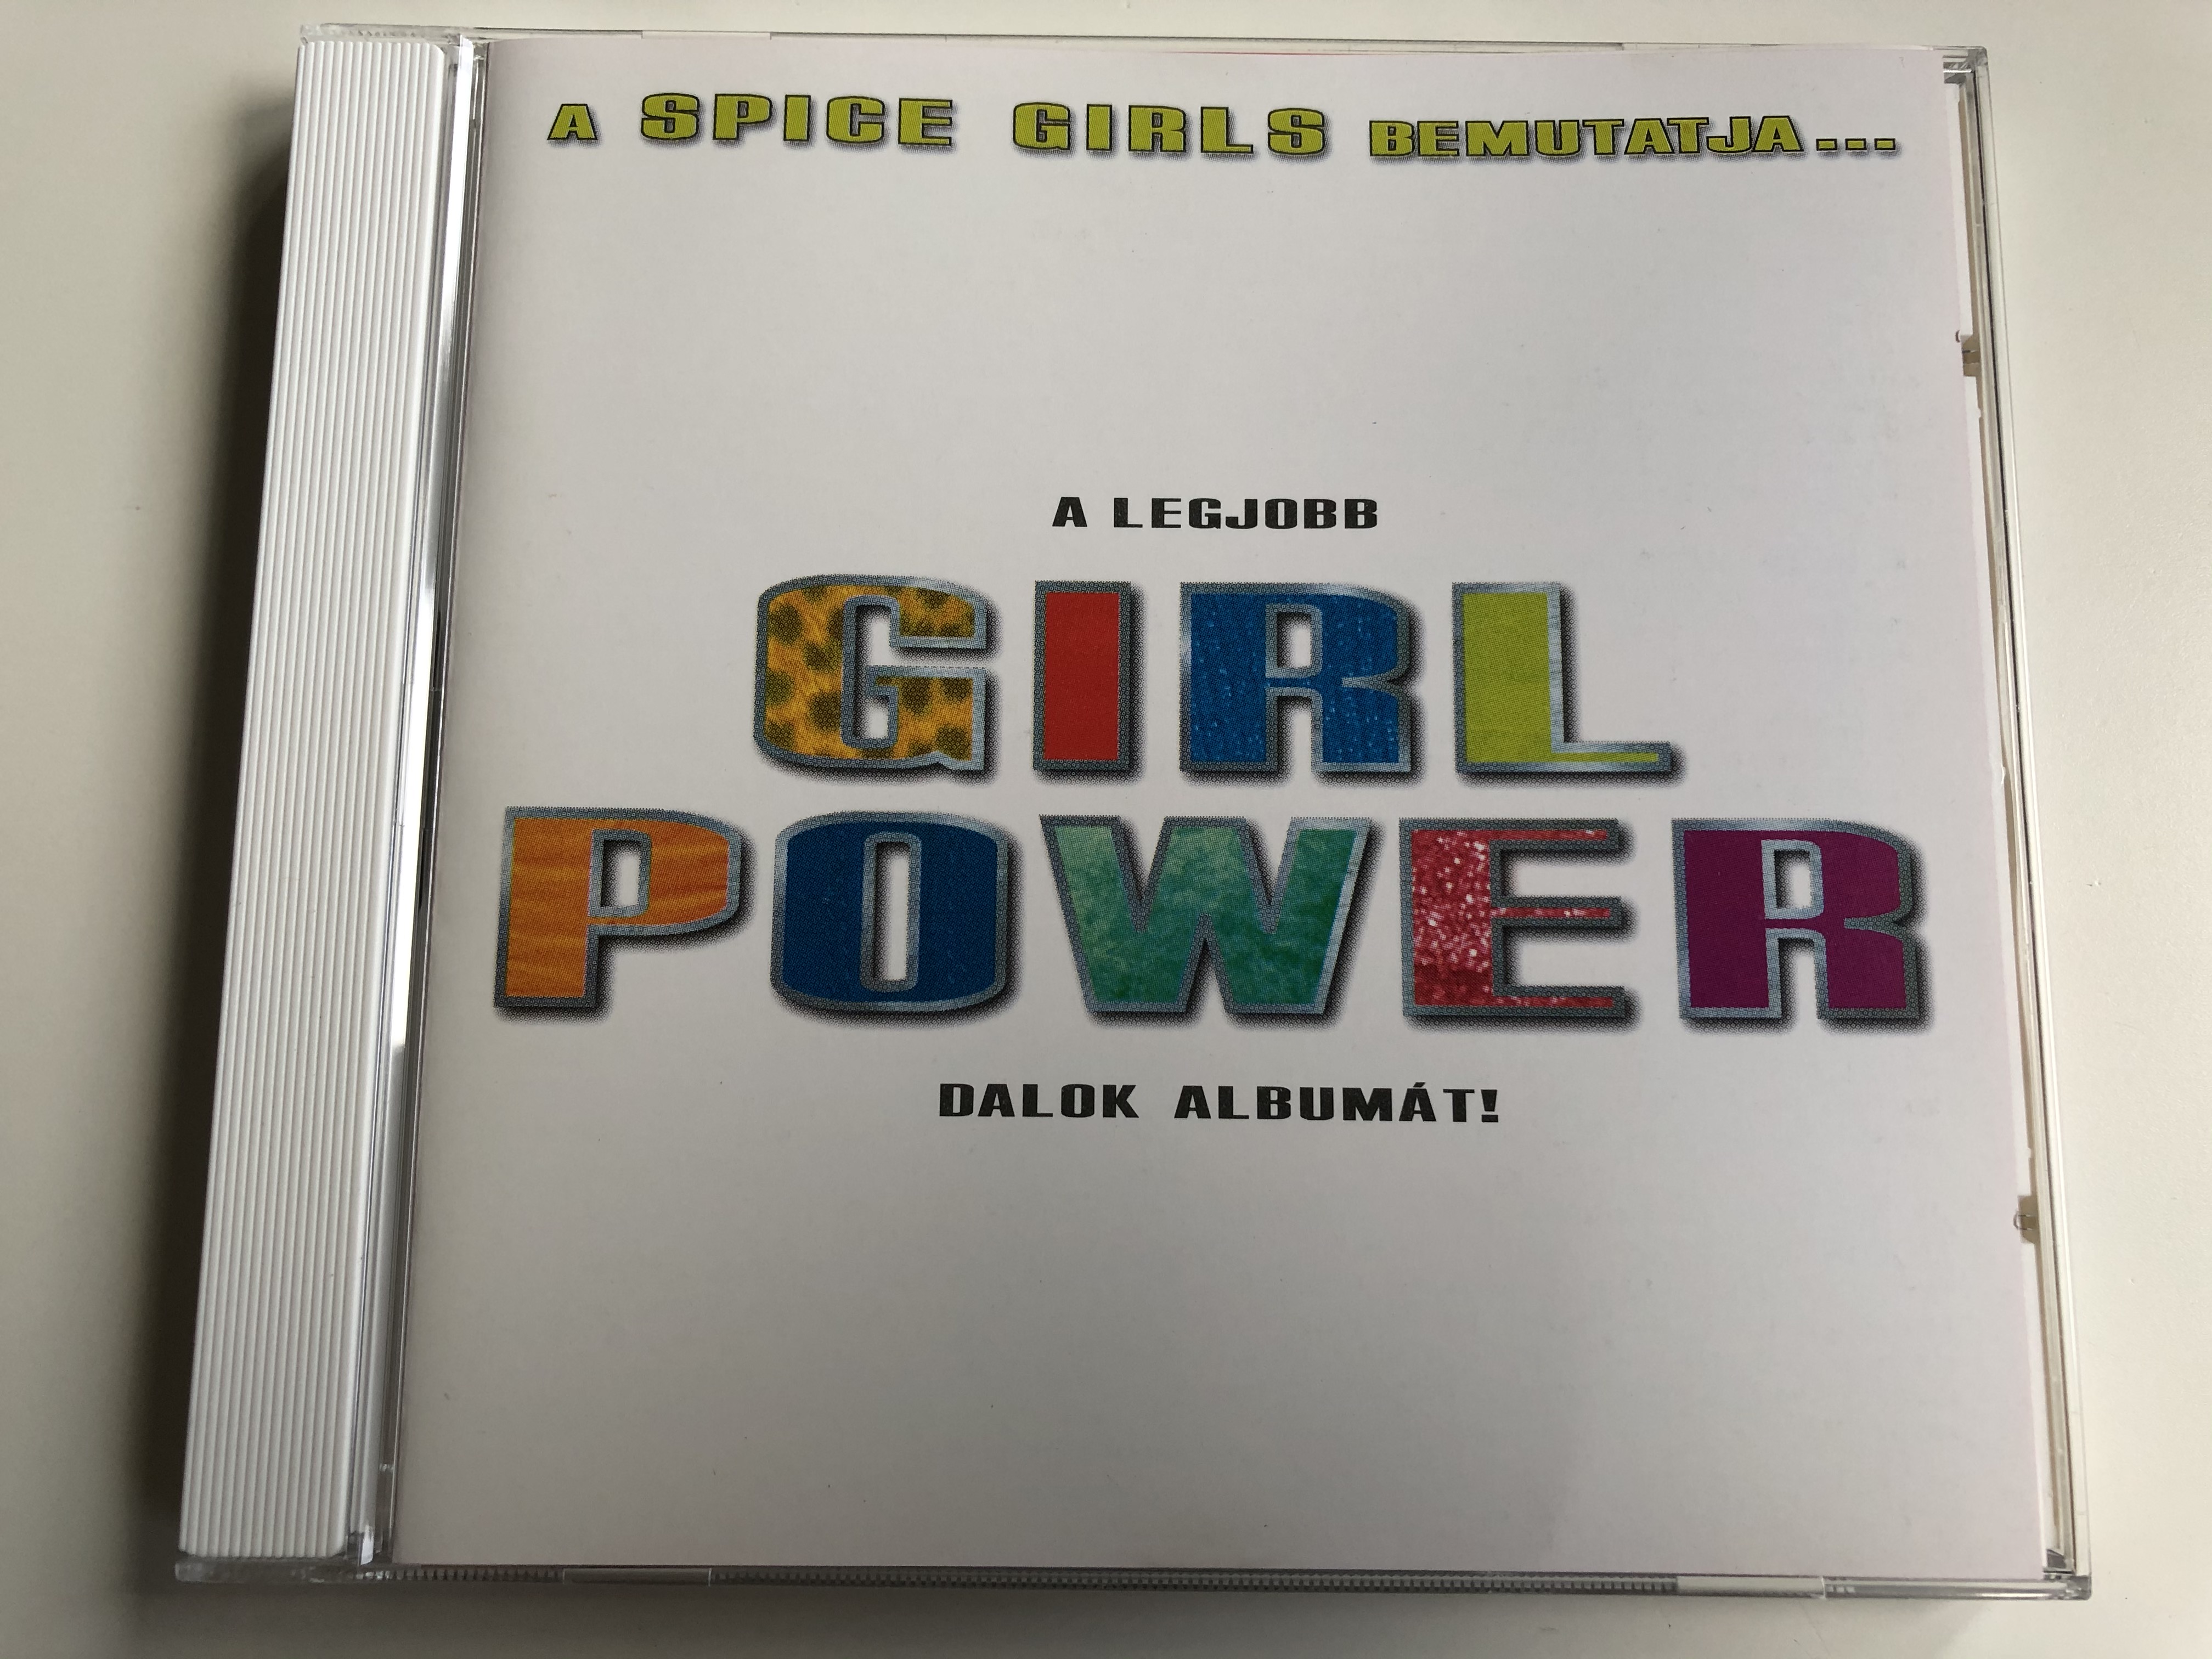 a-spice-girls-bemutatja...-a-legjobb-girl-power-dalok-albumat-emi-quint-audio-cd-7243-8-59695-2-2-1-.jpg